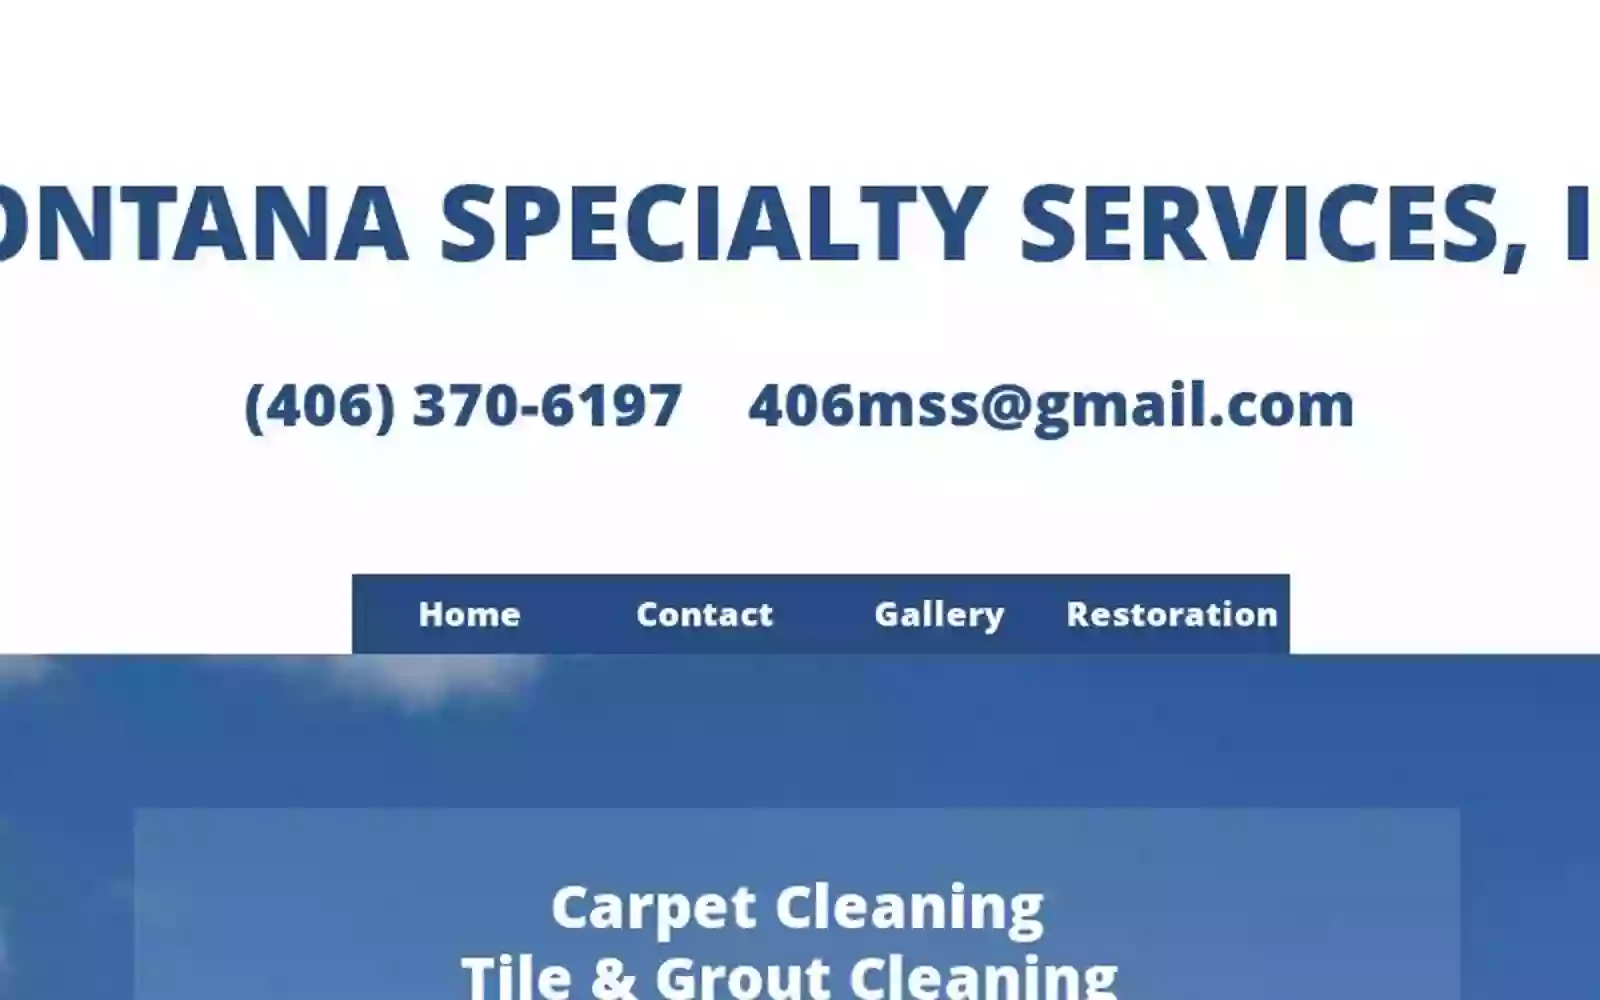 Montana Specialty Services, Inc